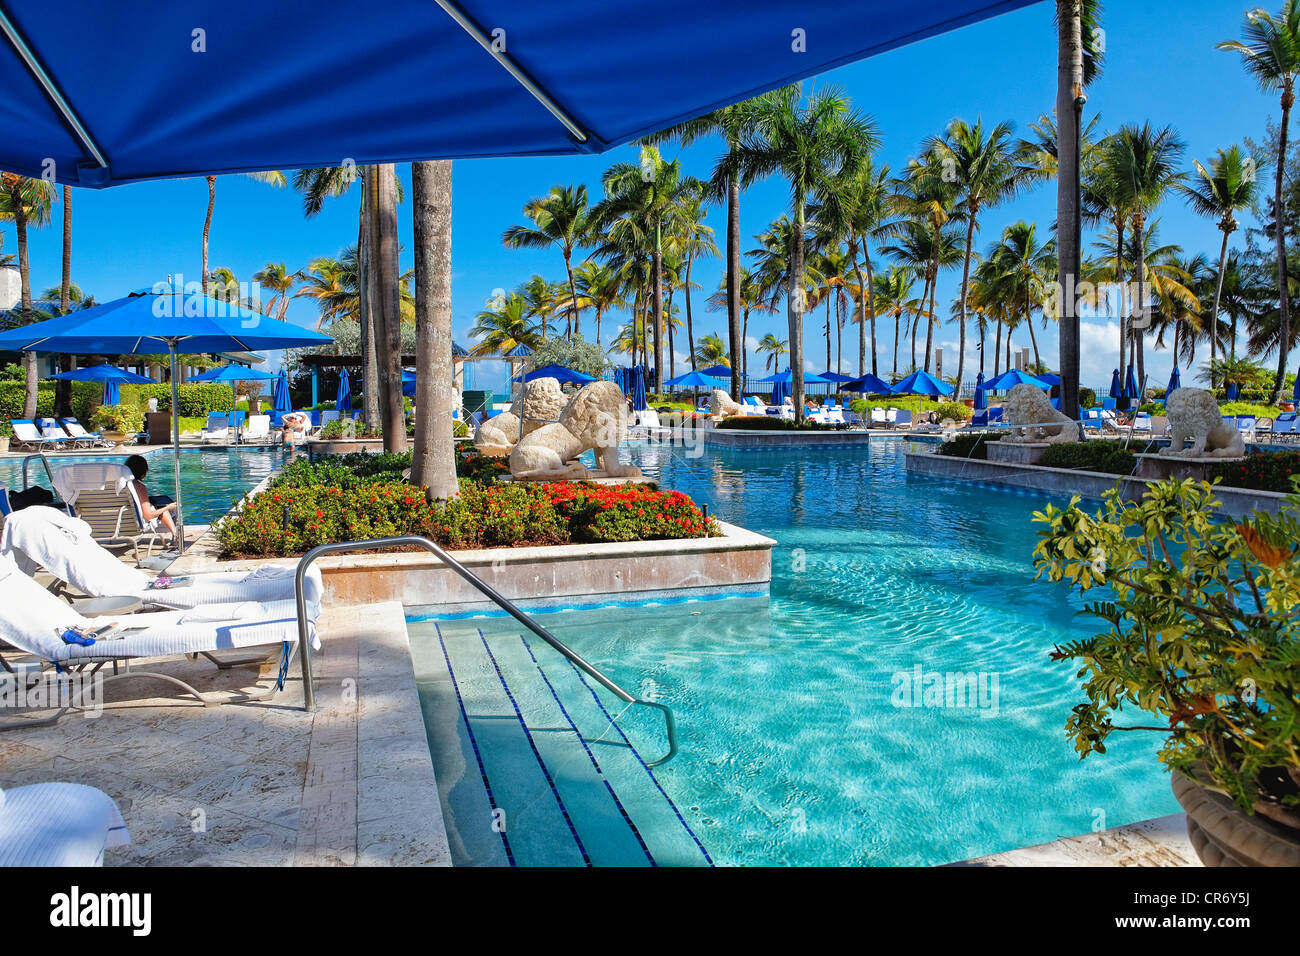 Poolside View from Under a Beach Umbrella, Ritz-Carlton Resort, San Juan Puerto Rico Stock Photo